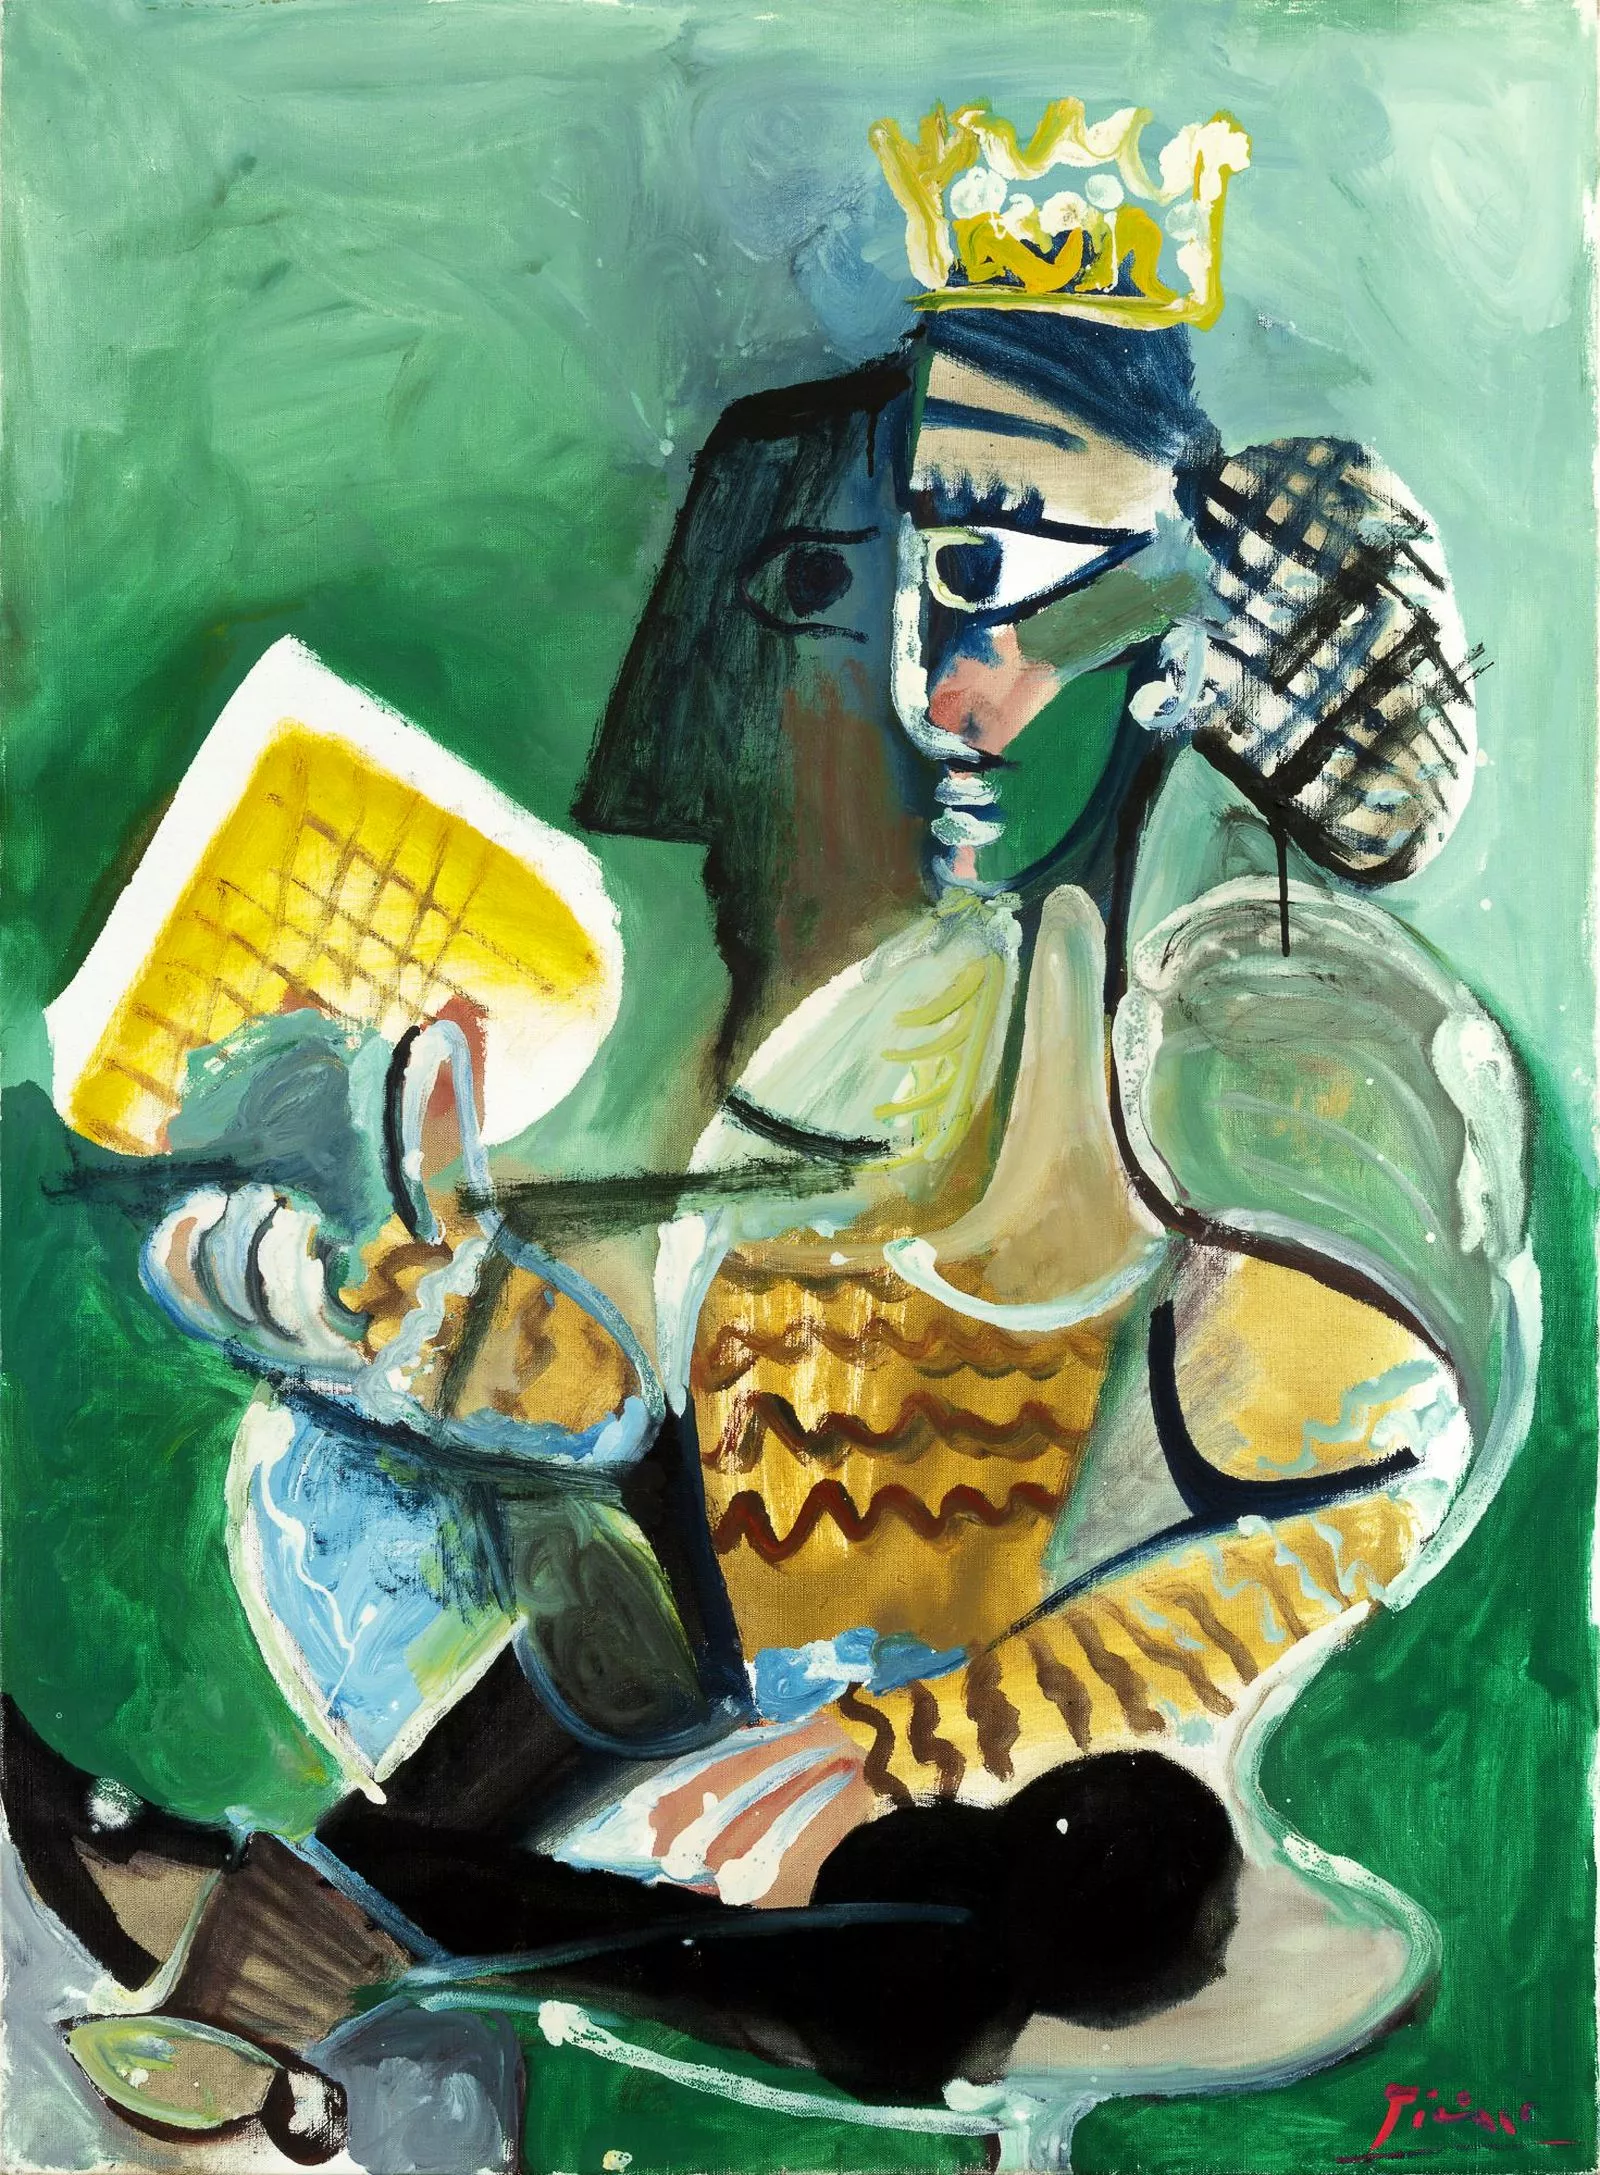 Пабло Пикассо. «Femme assise à la galette des rois» («Девушка с французским королевским пирогом»), 1965 г.